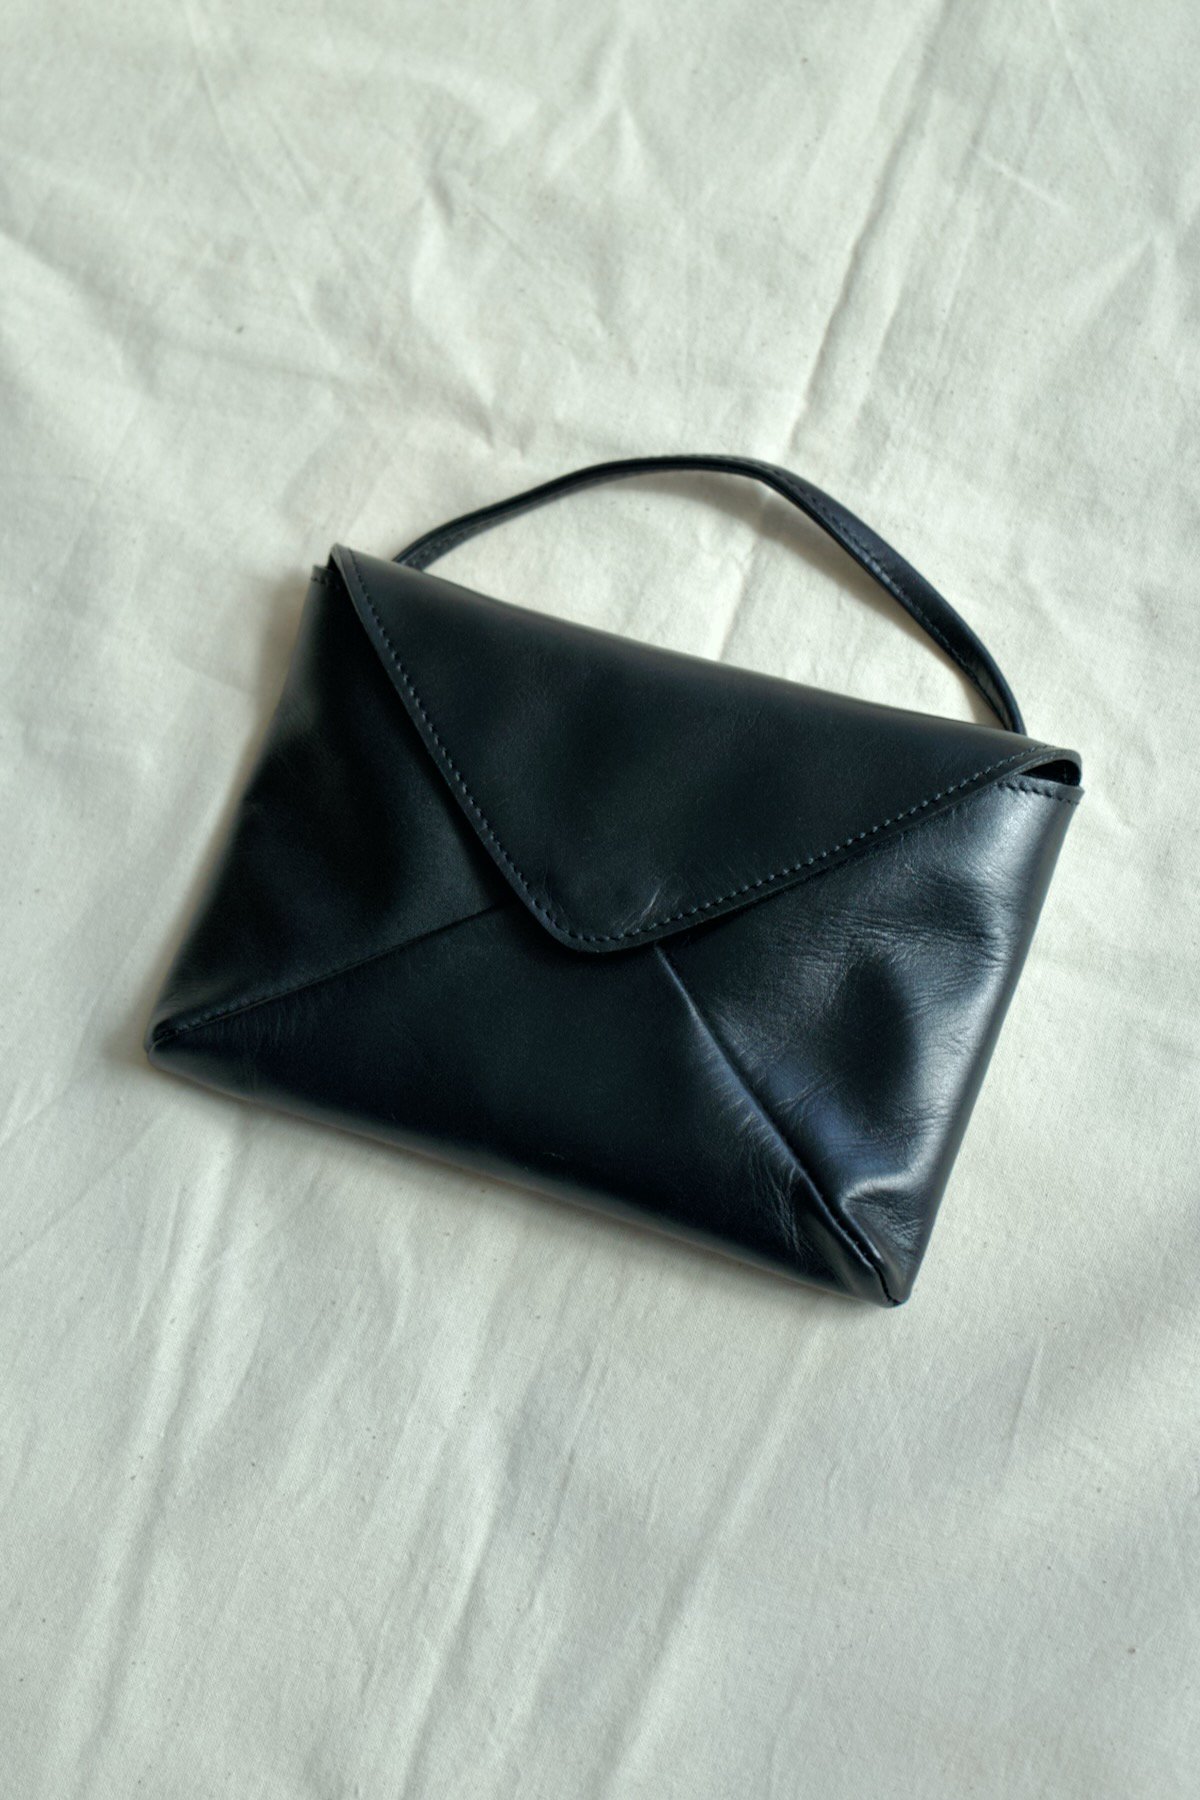 COSMIC WONDER / Light leather envelop purse / BLACK